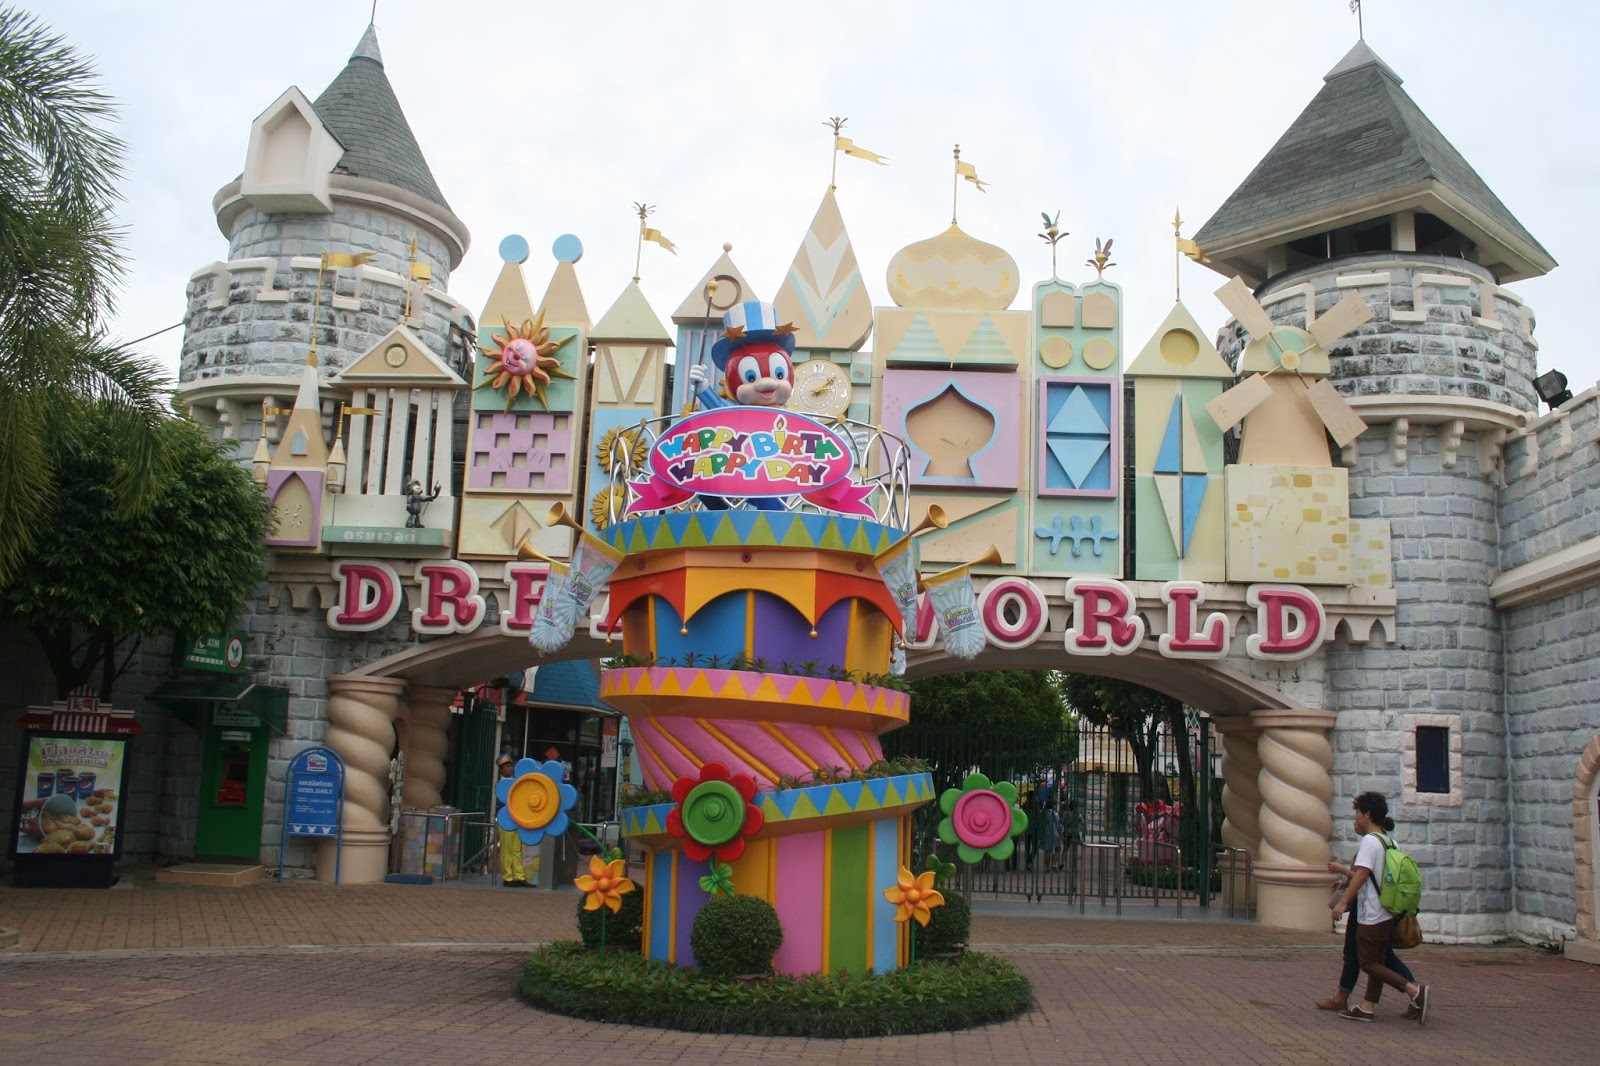 Dream World - Bangkok Disneyland